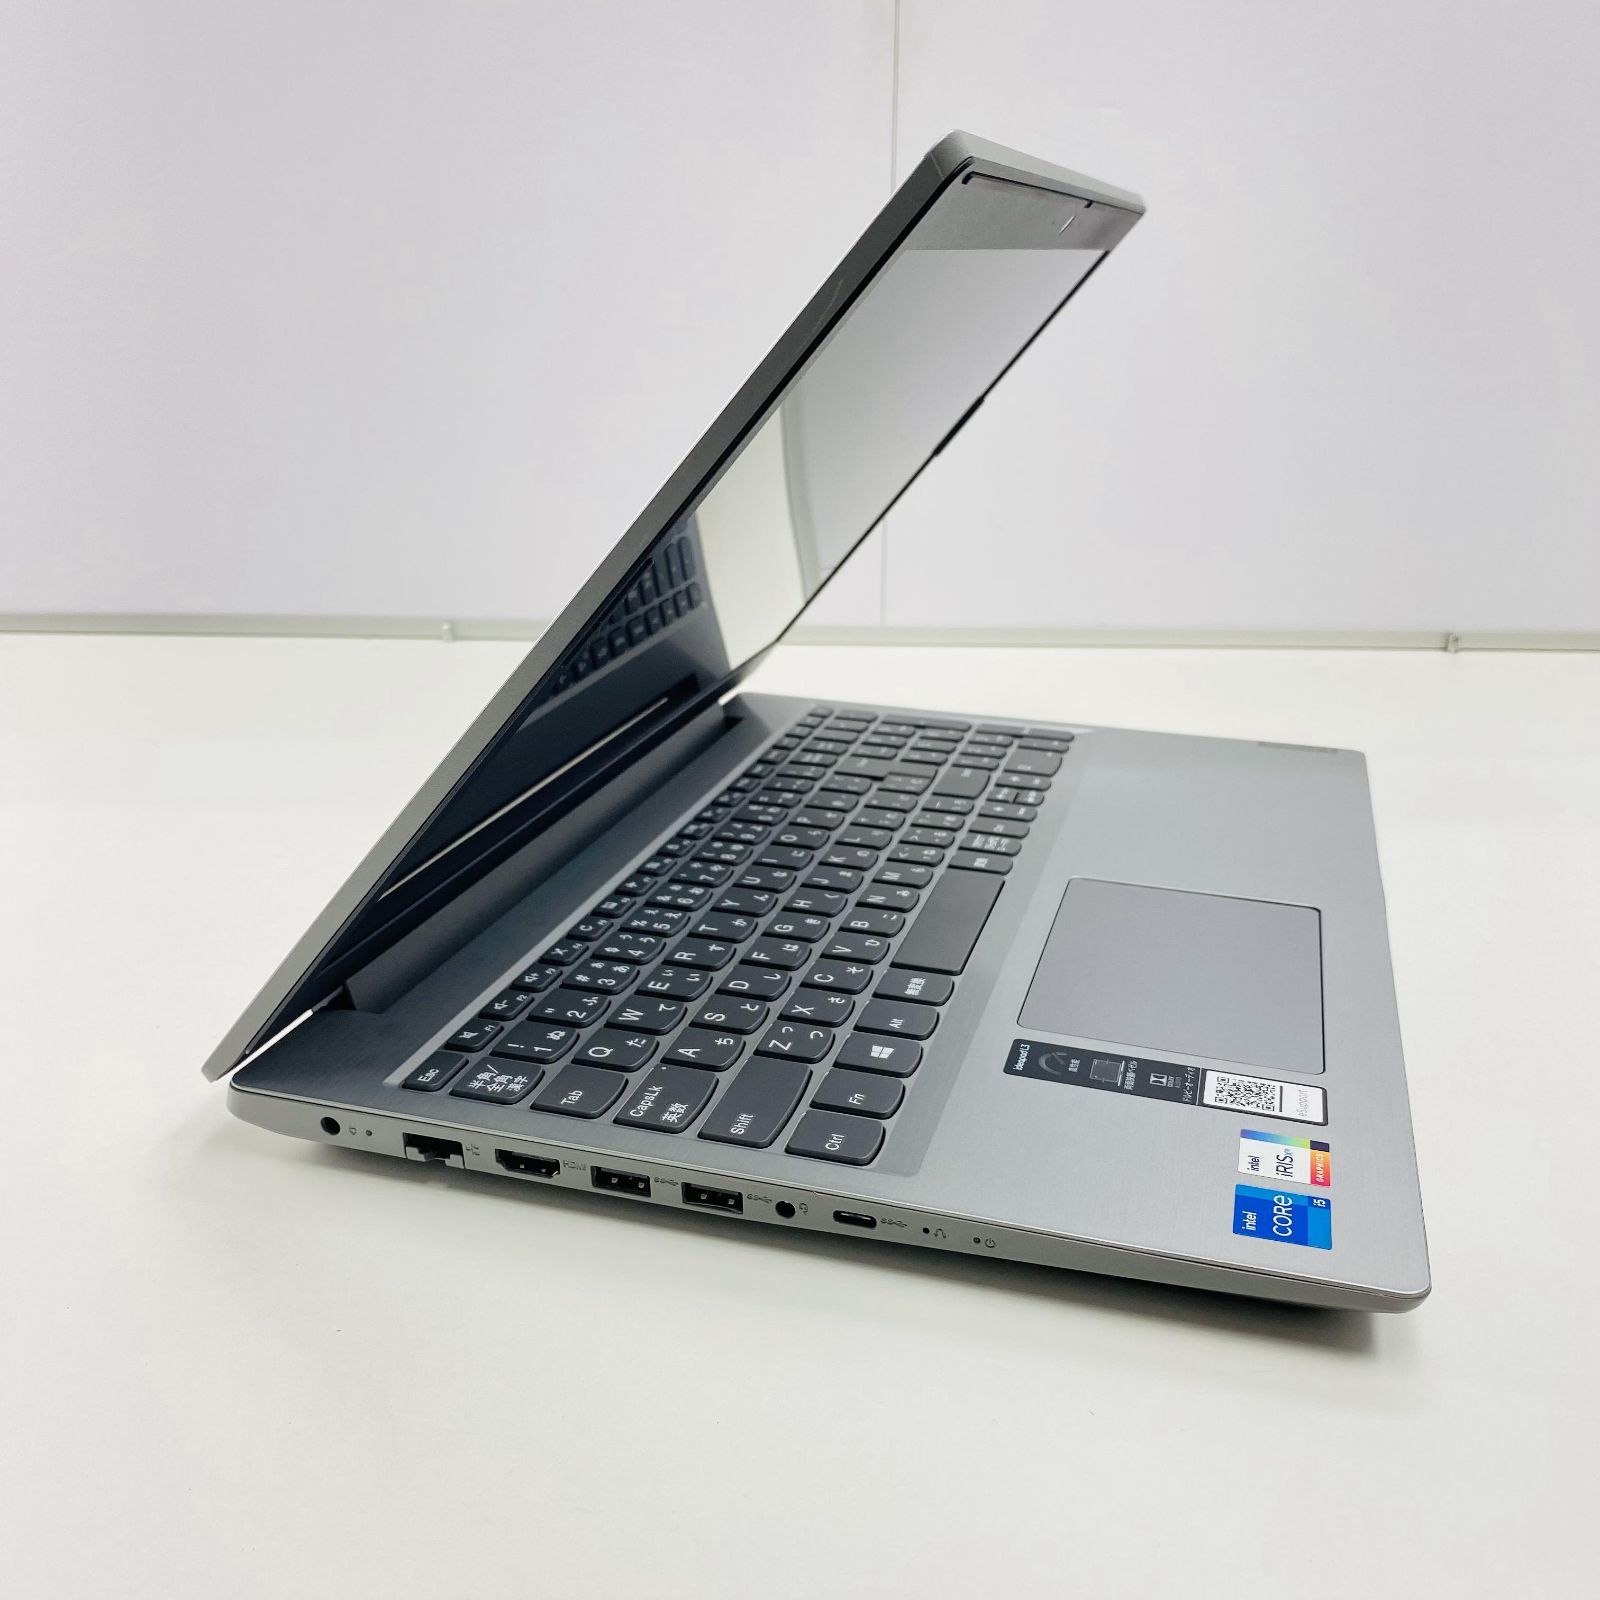 Lenovo IdeaPad L3 Office2021 Pro Plus付き